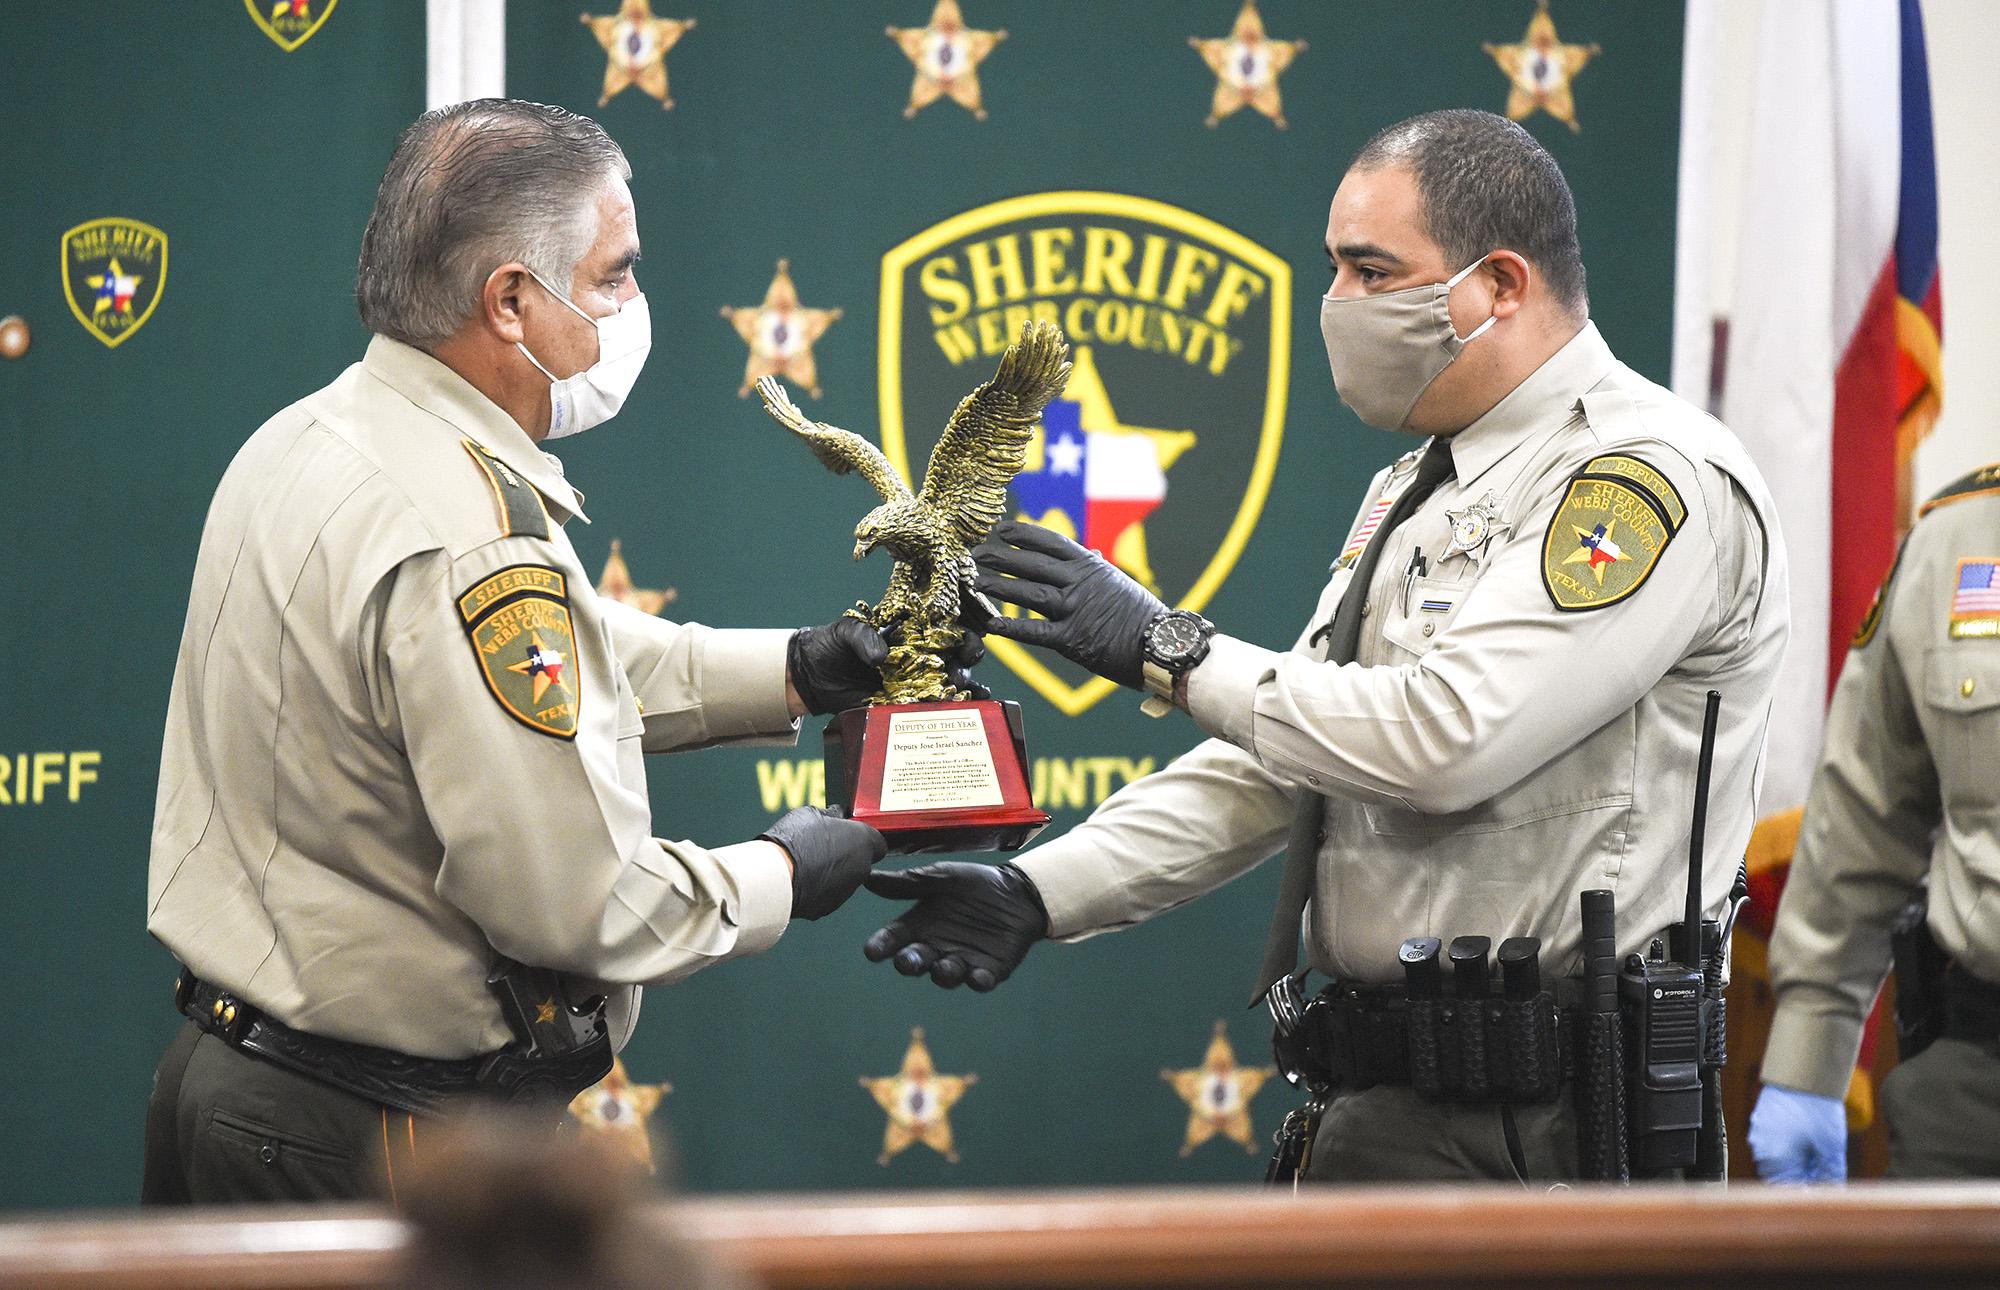 Webb County Sheriff’s Office awards Deputy of the Year